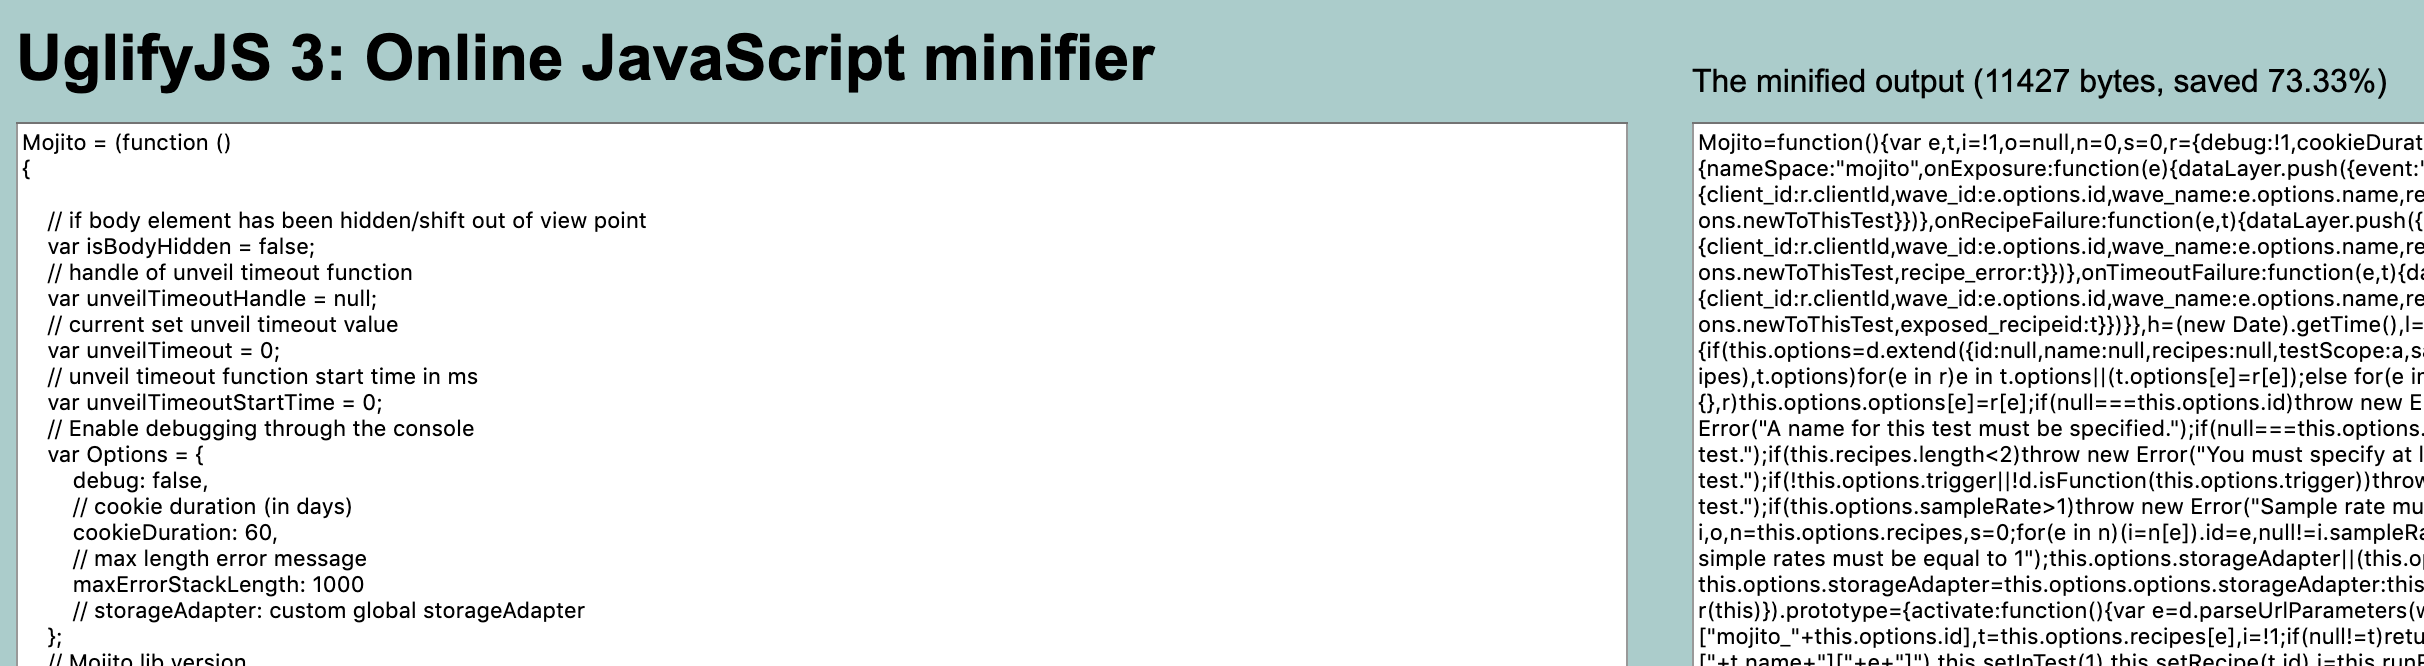 Minify your JS